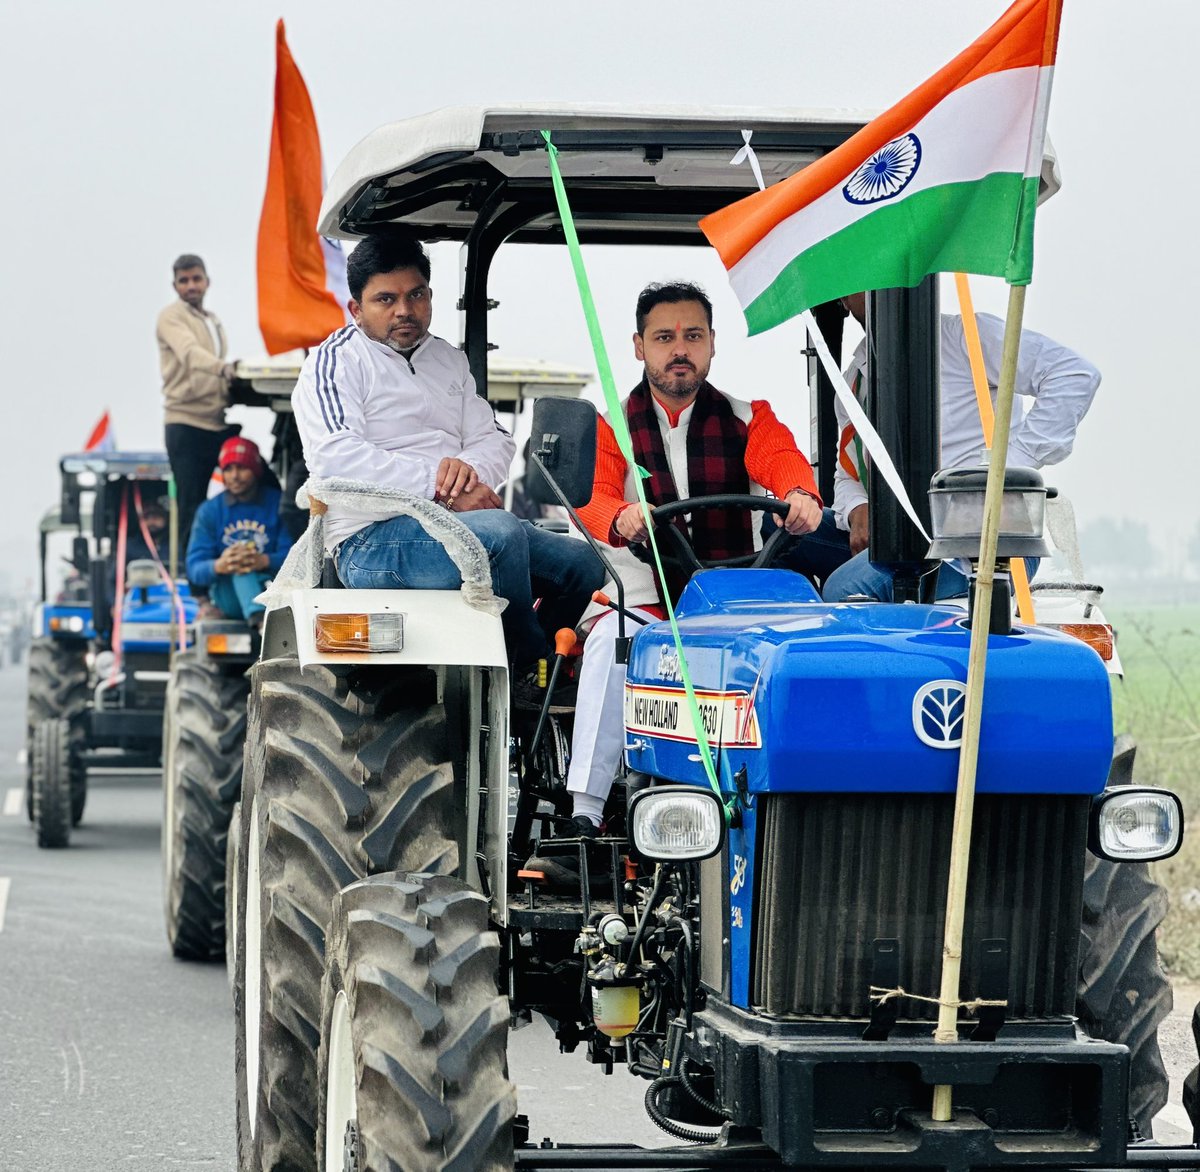 भव्य तिरंगा ट्रैक्टर यात्रा..
📍टप्पल, जिला अलीगढ़। 

जय हिन्द 🇮🇳

#गणतंत्र_दिवस #RepublicDay2024 #TractorRally #TirangaYatra #26January2024 Jai Hind @BJYM @BJP4UP